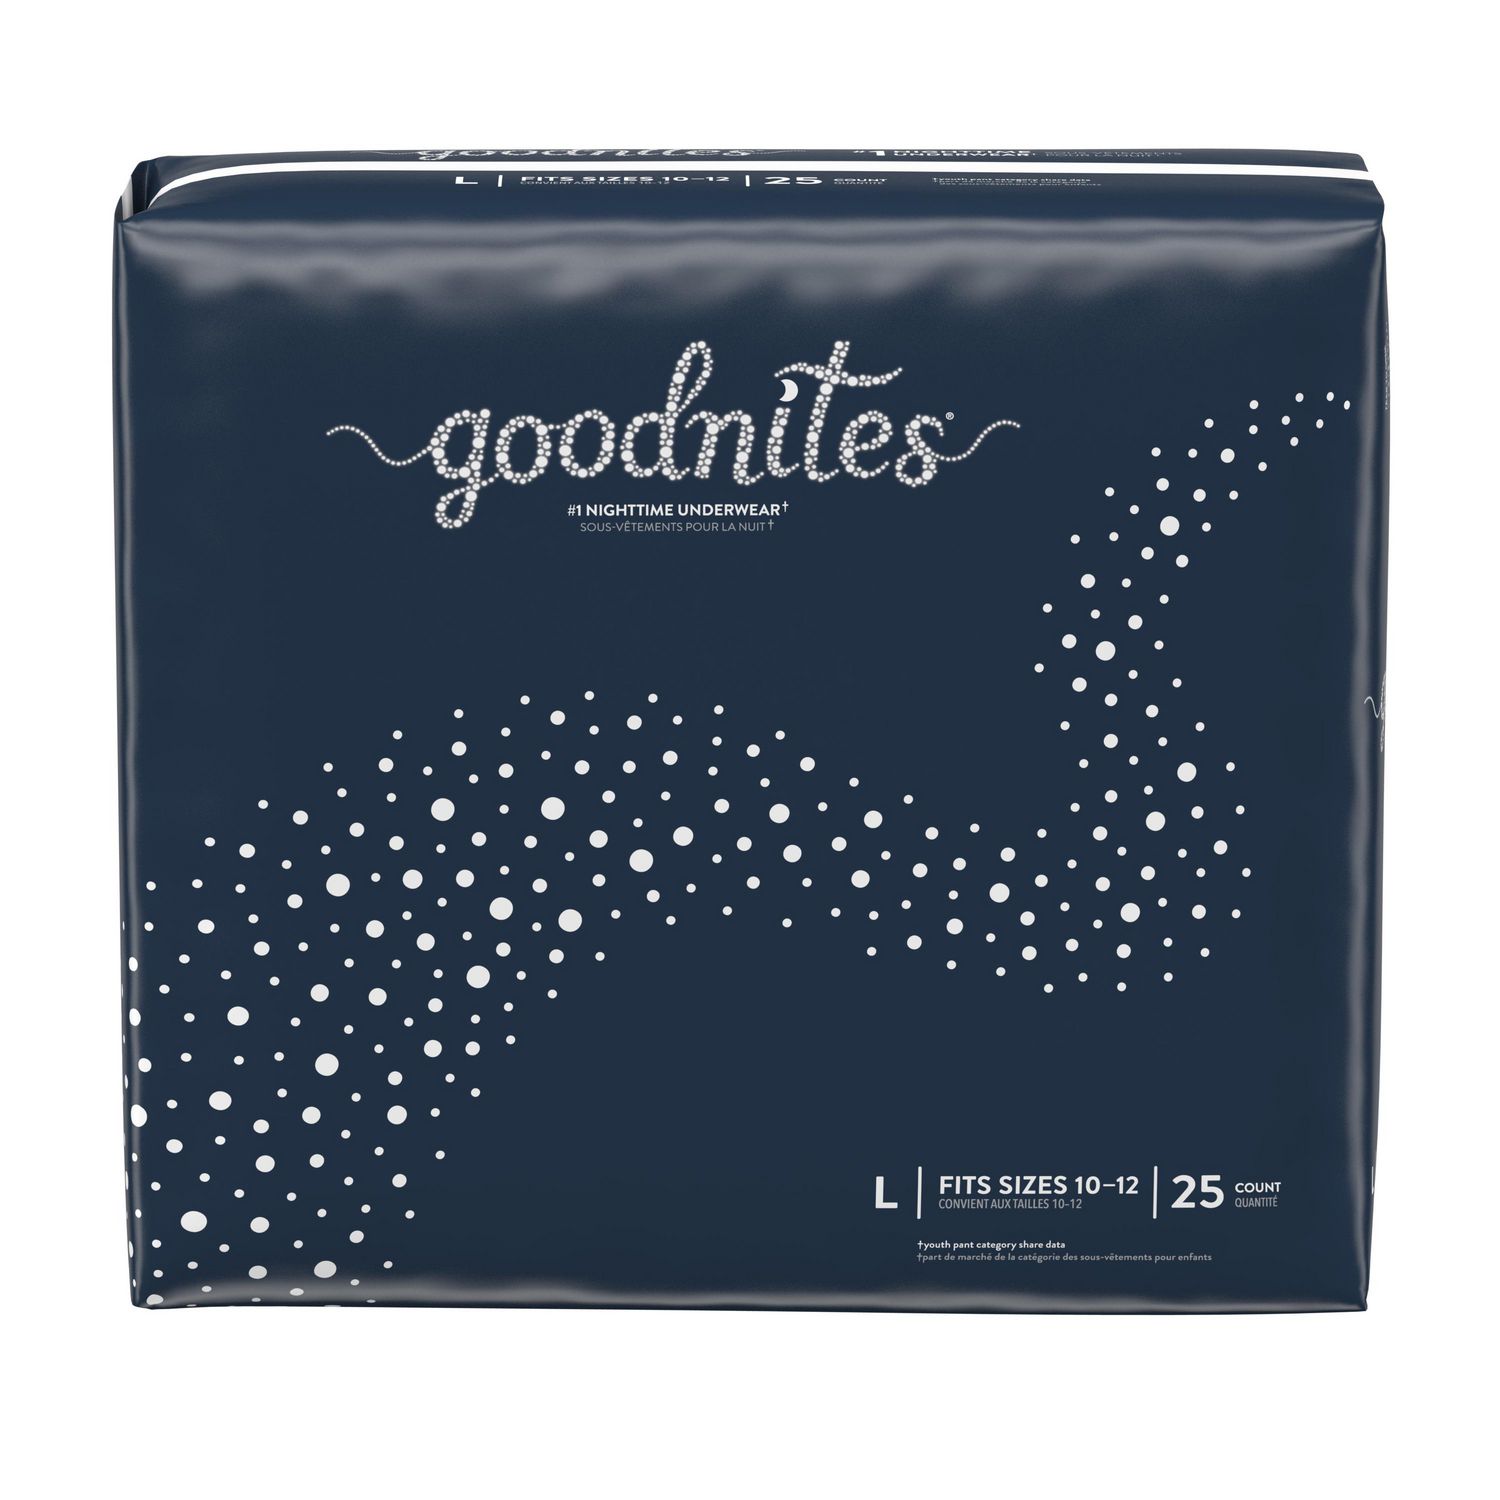  Goodnites Boys' Nighttime Bedwetting Underwear, Size